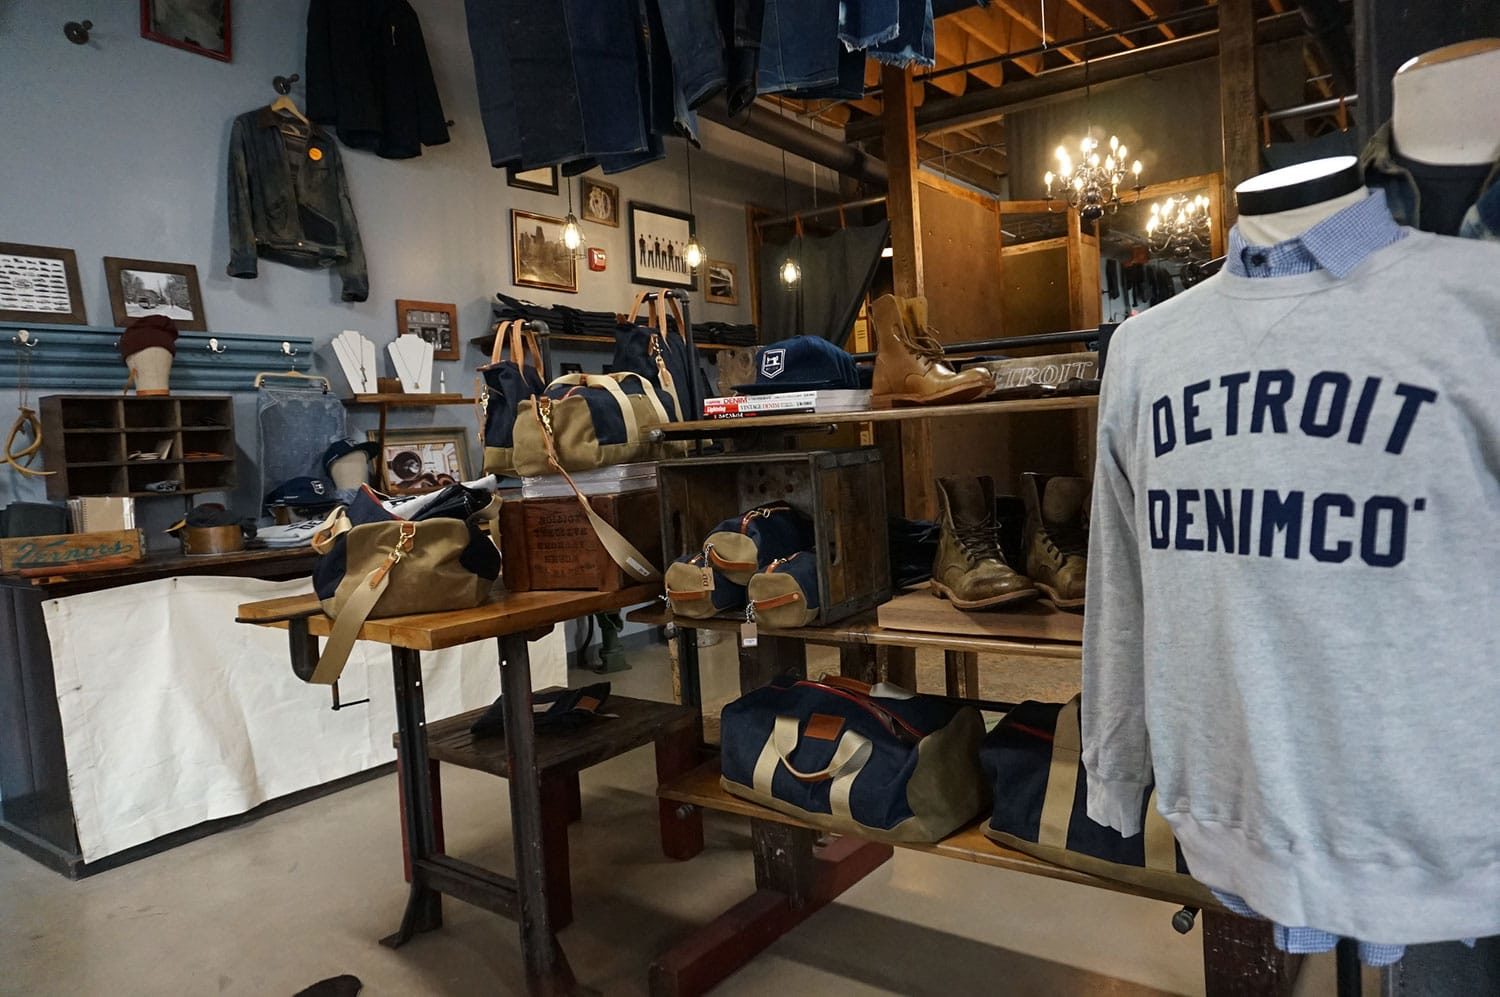 Detroit Denim Co.